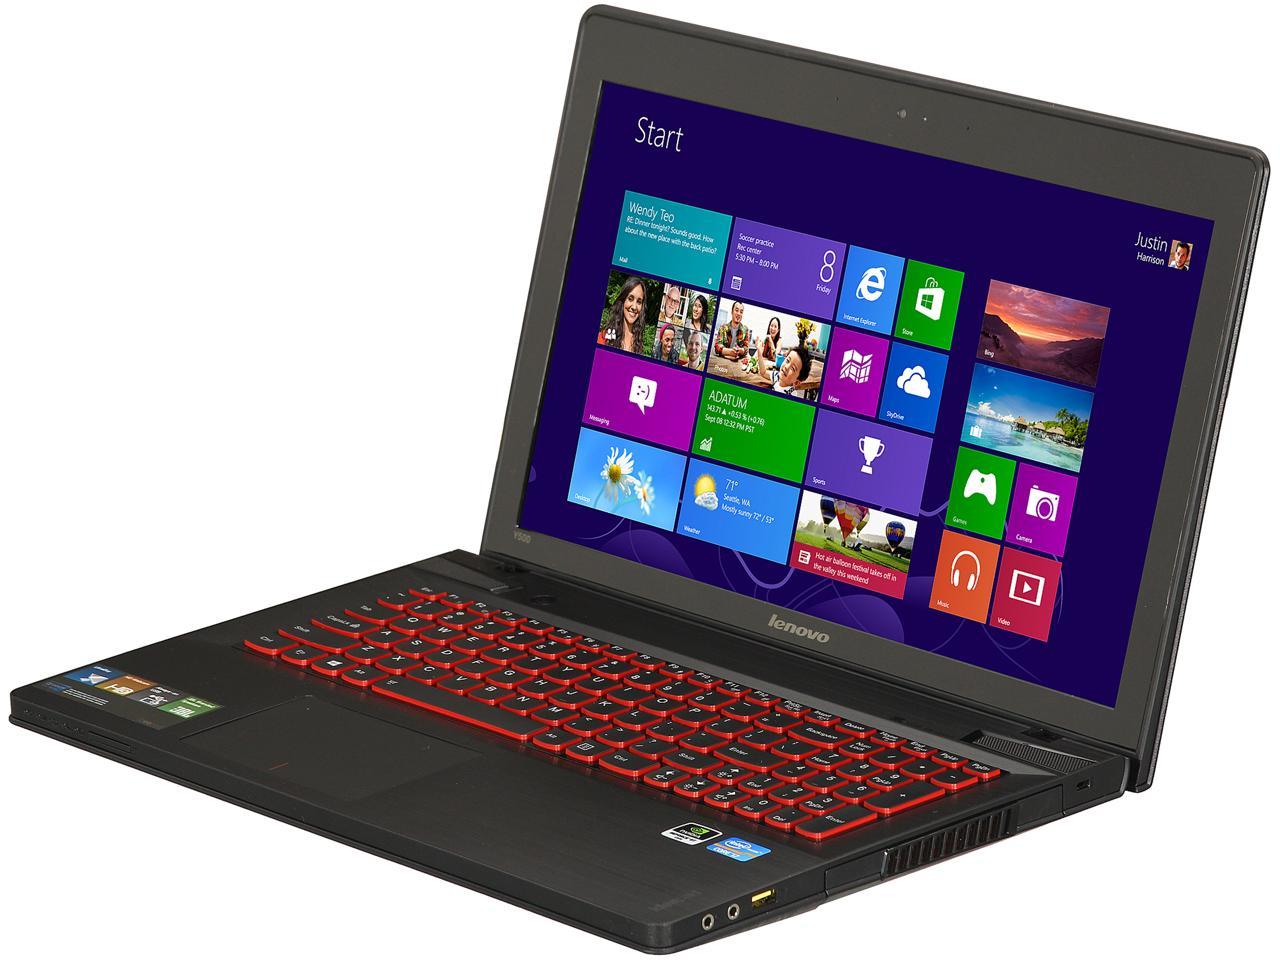 aktif Yerçekimi İle uyumlu  Lenovo Y500 (59359557) Gaming Laptop Intel Core i7-3630QM 2.4GHz 15.6